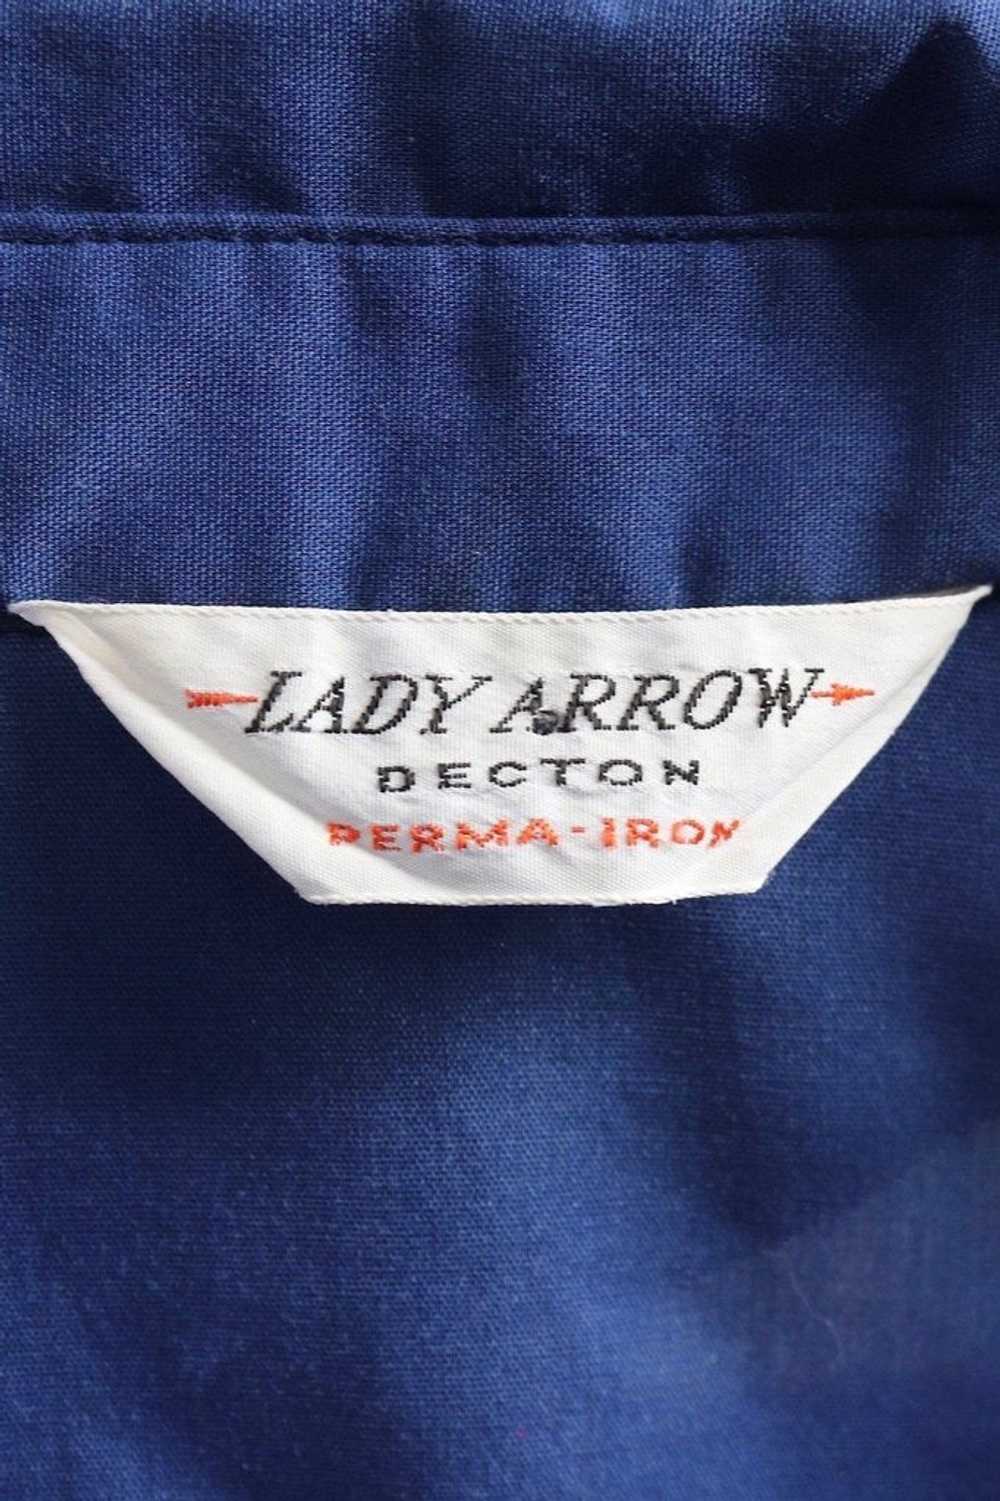 Vintage Navy Blue Lady Arrow Shirt Dress - image 5